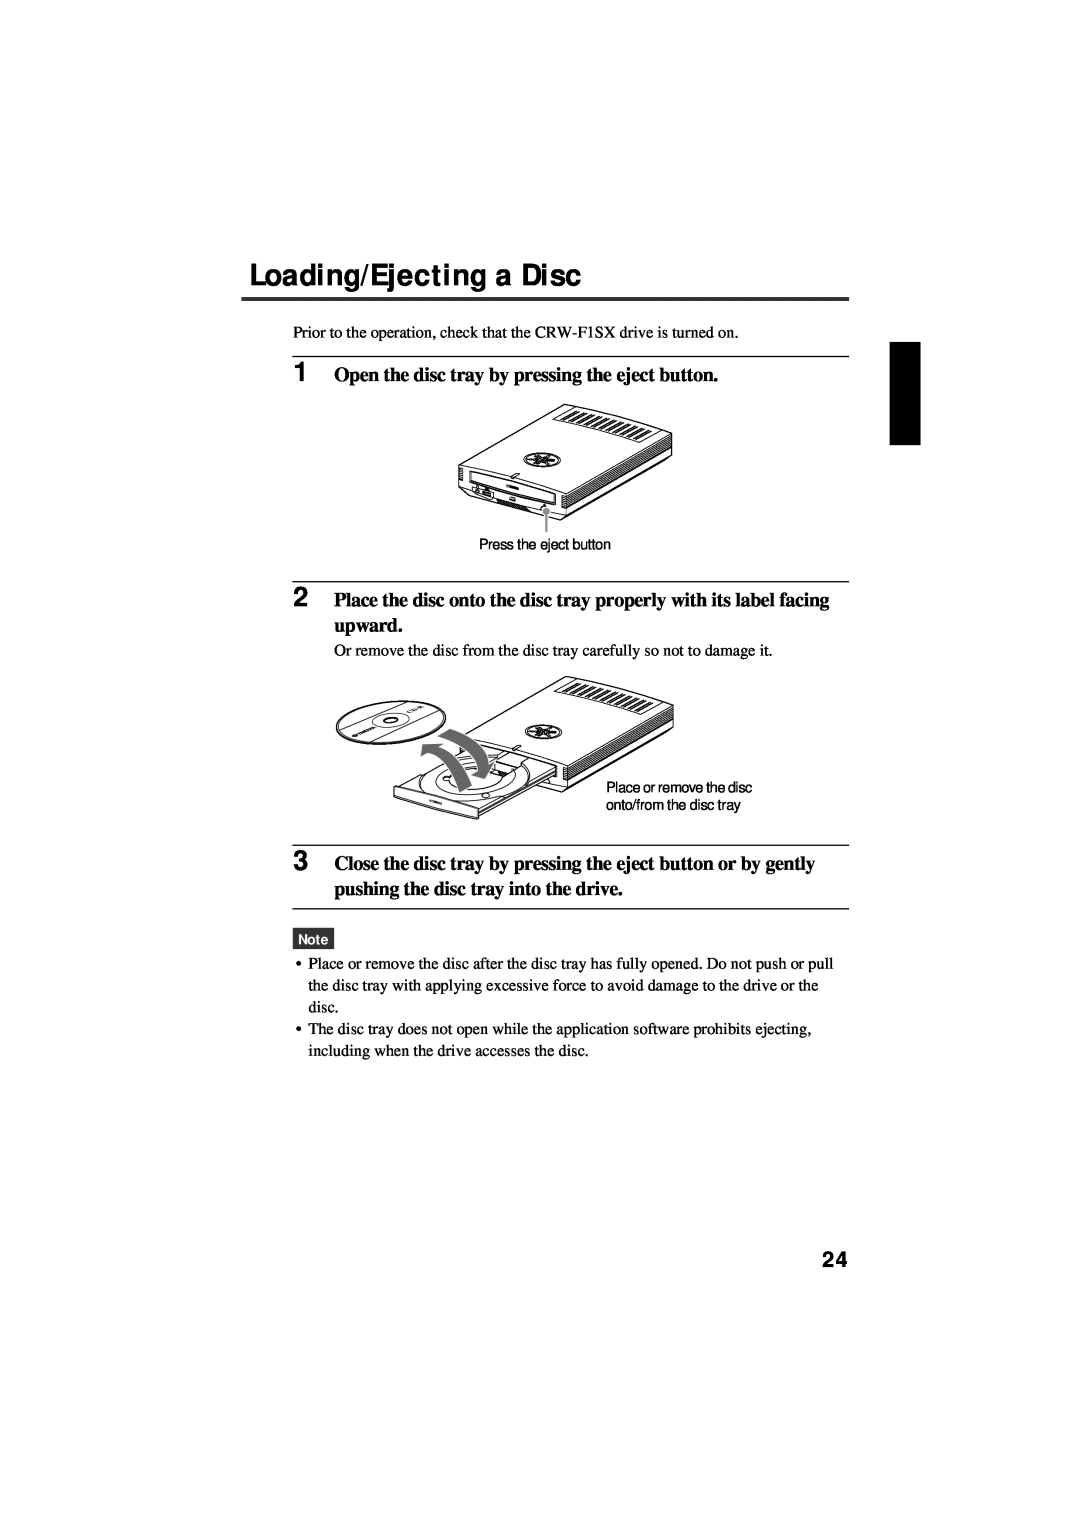 Yamaha CRW-F1SX manual Loading/Ejecting a Disc 